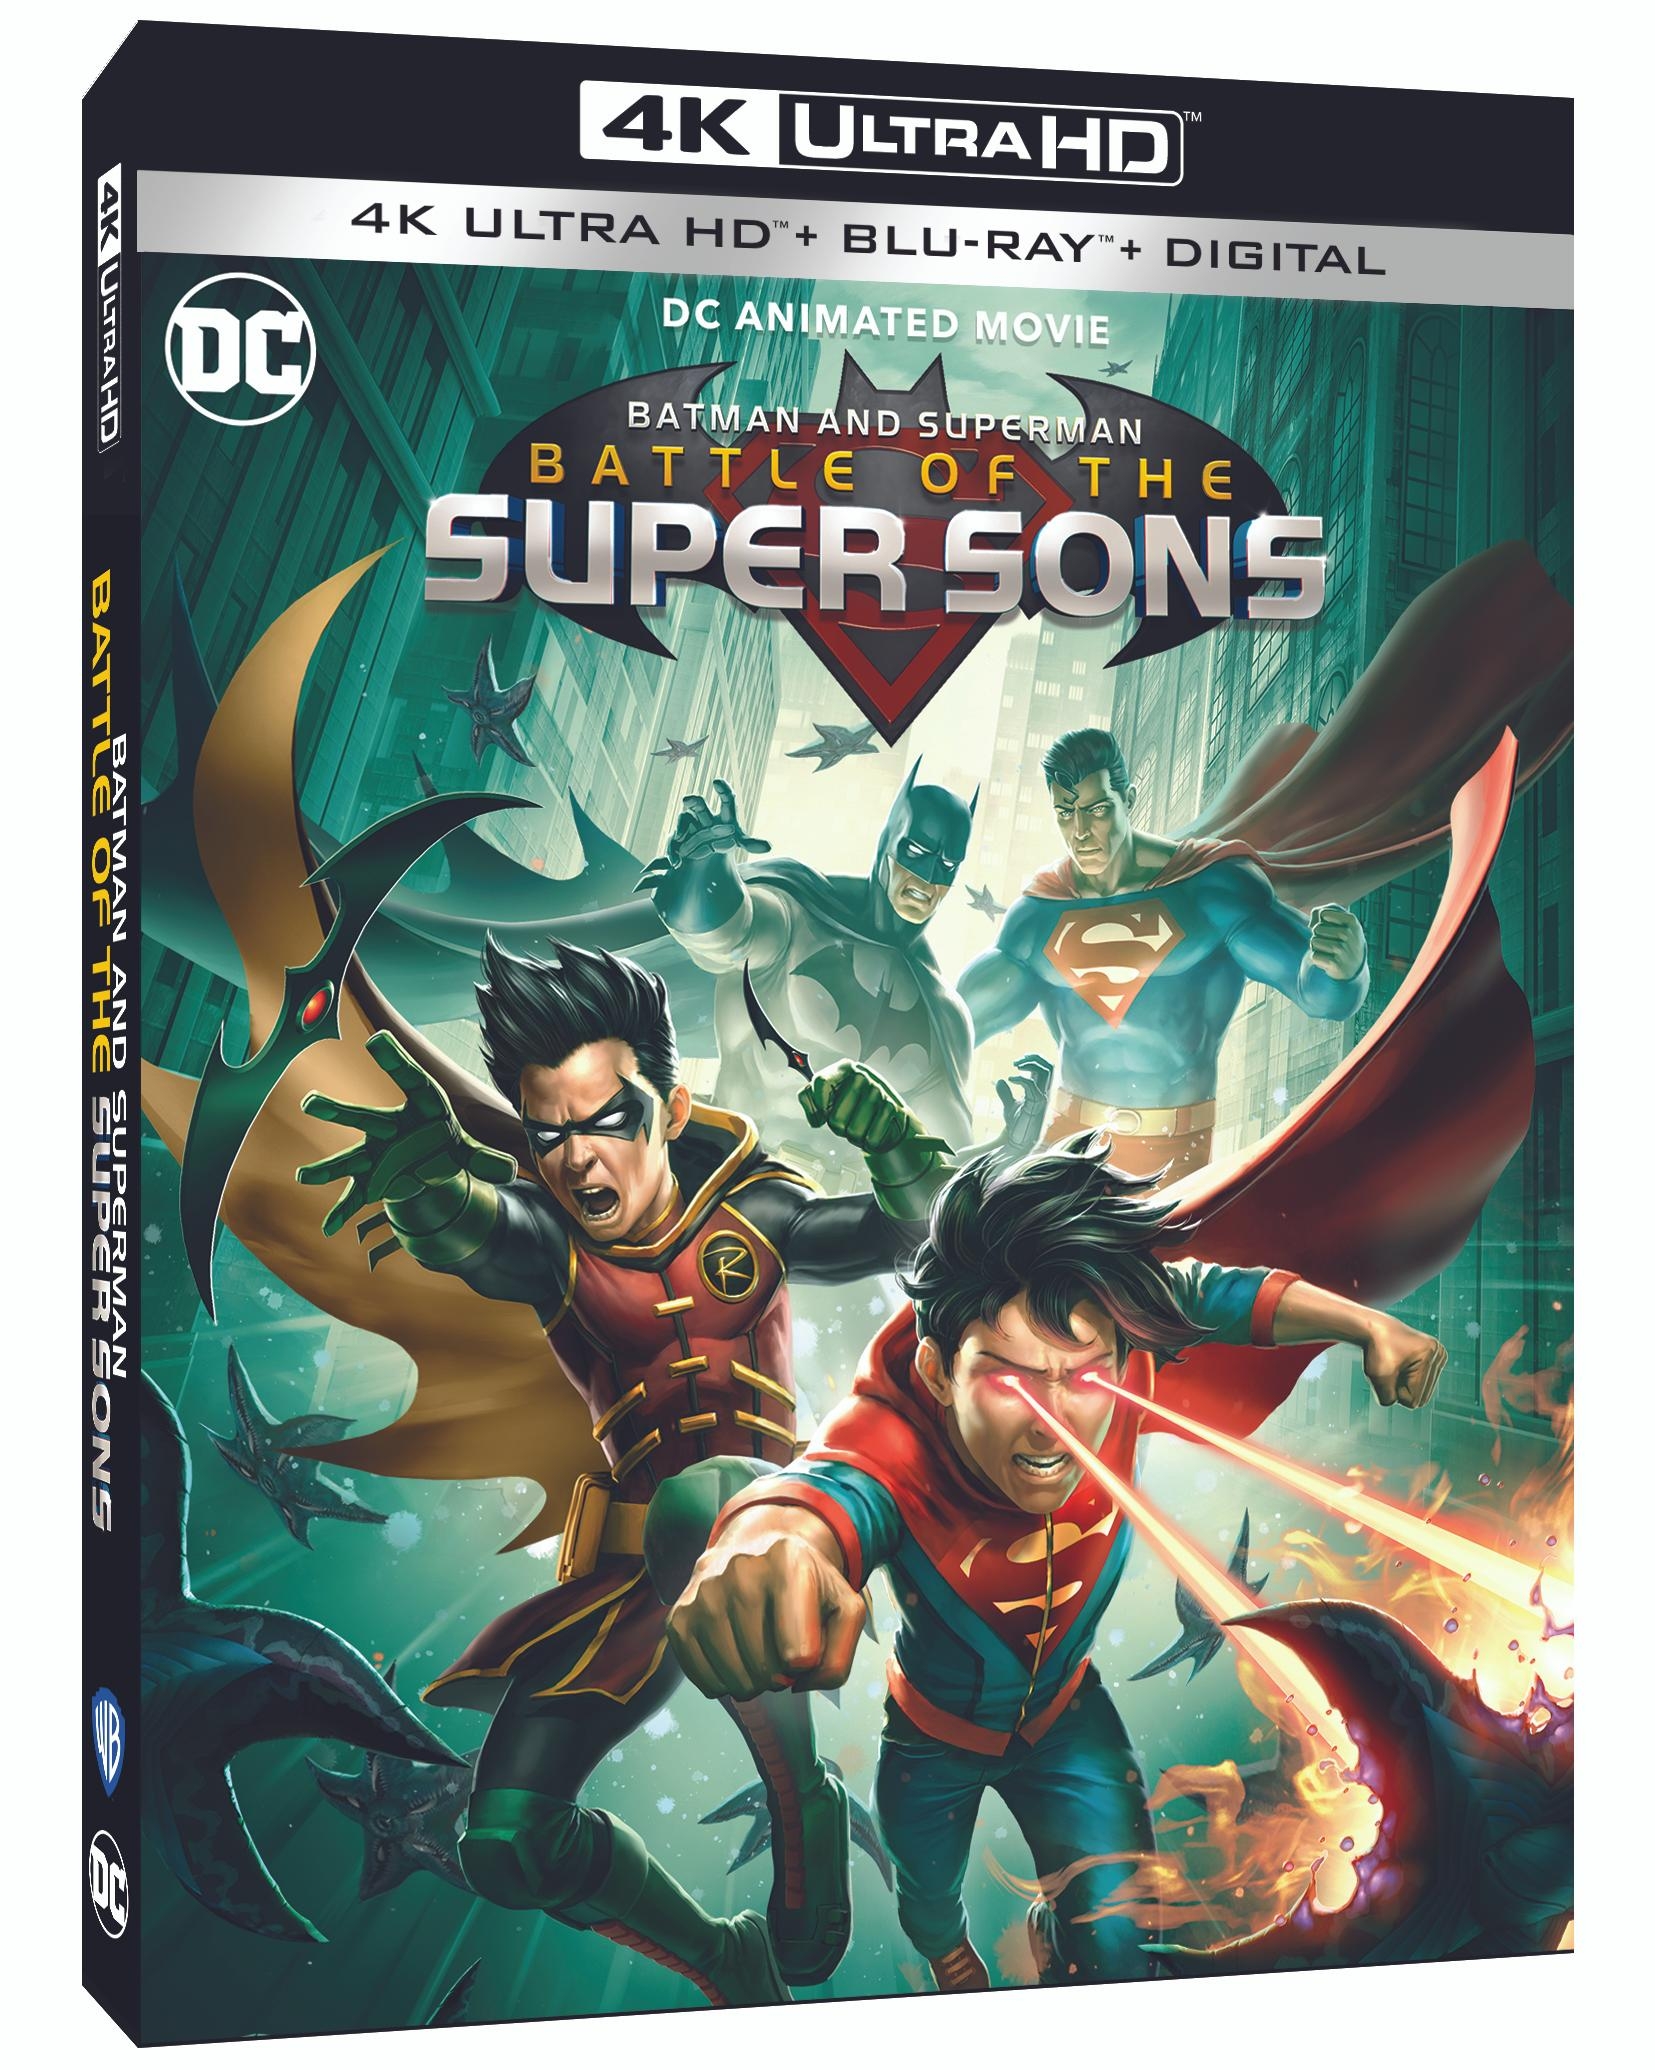 BATMAN AND SUPERMAN: BATTLE OF THE SUPER SONS Arrives on 4K Ultra HD, Blu- ray & Digital October 18 